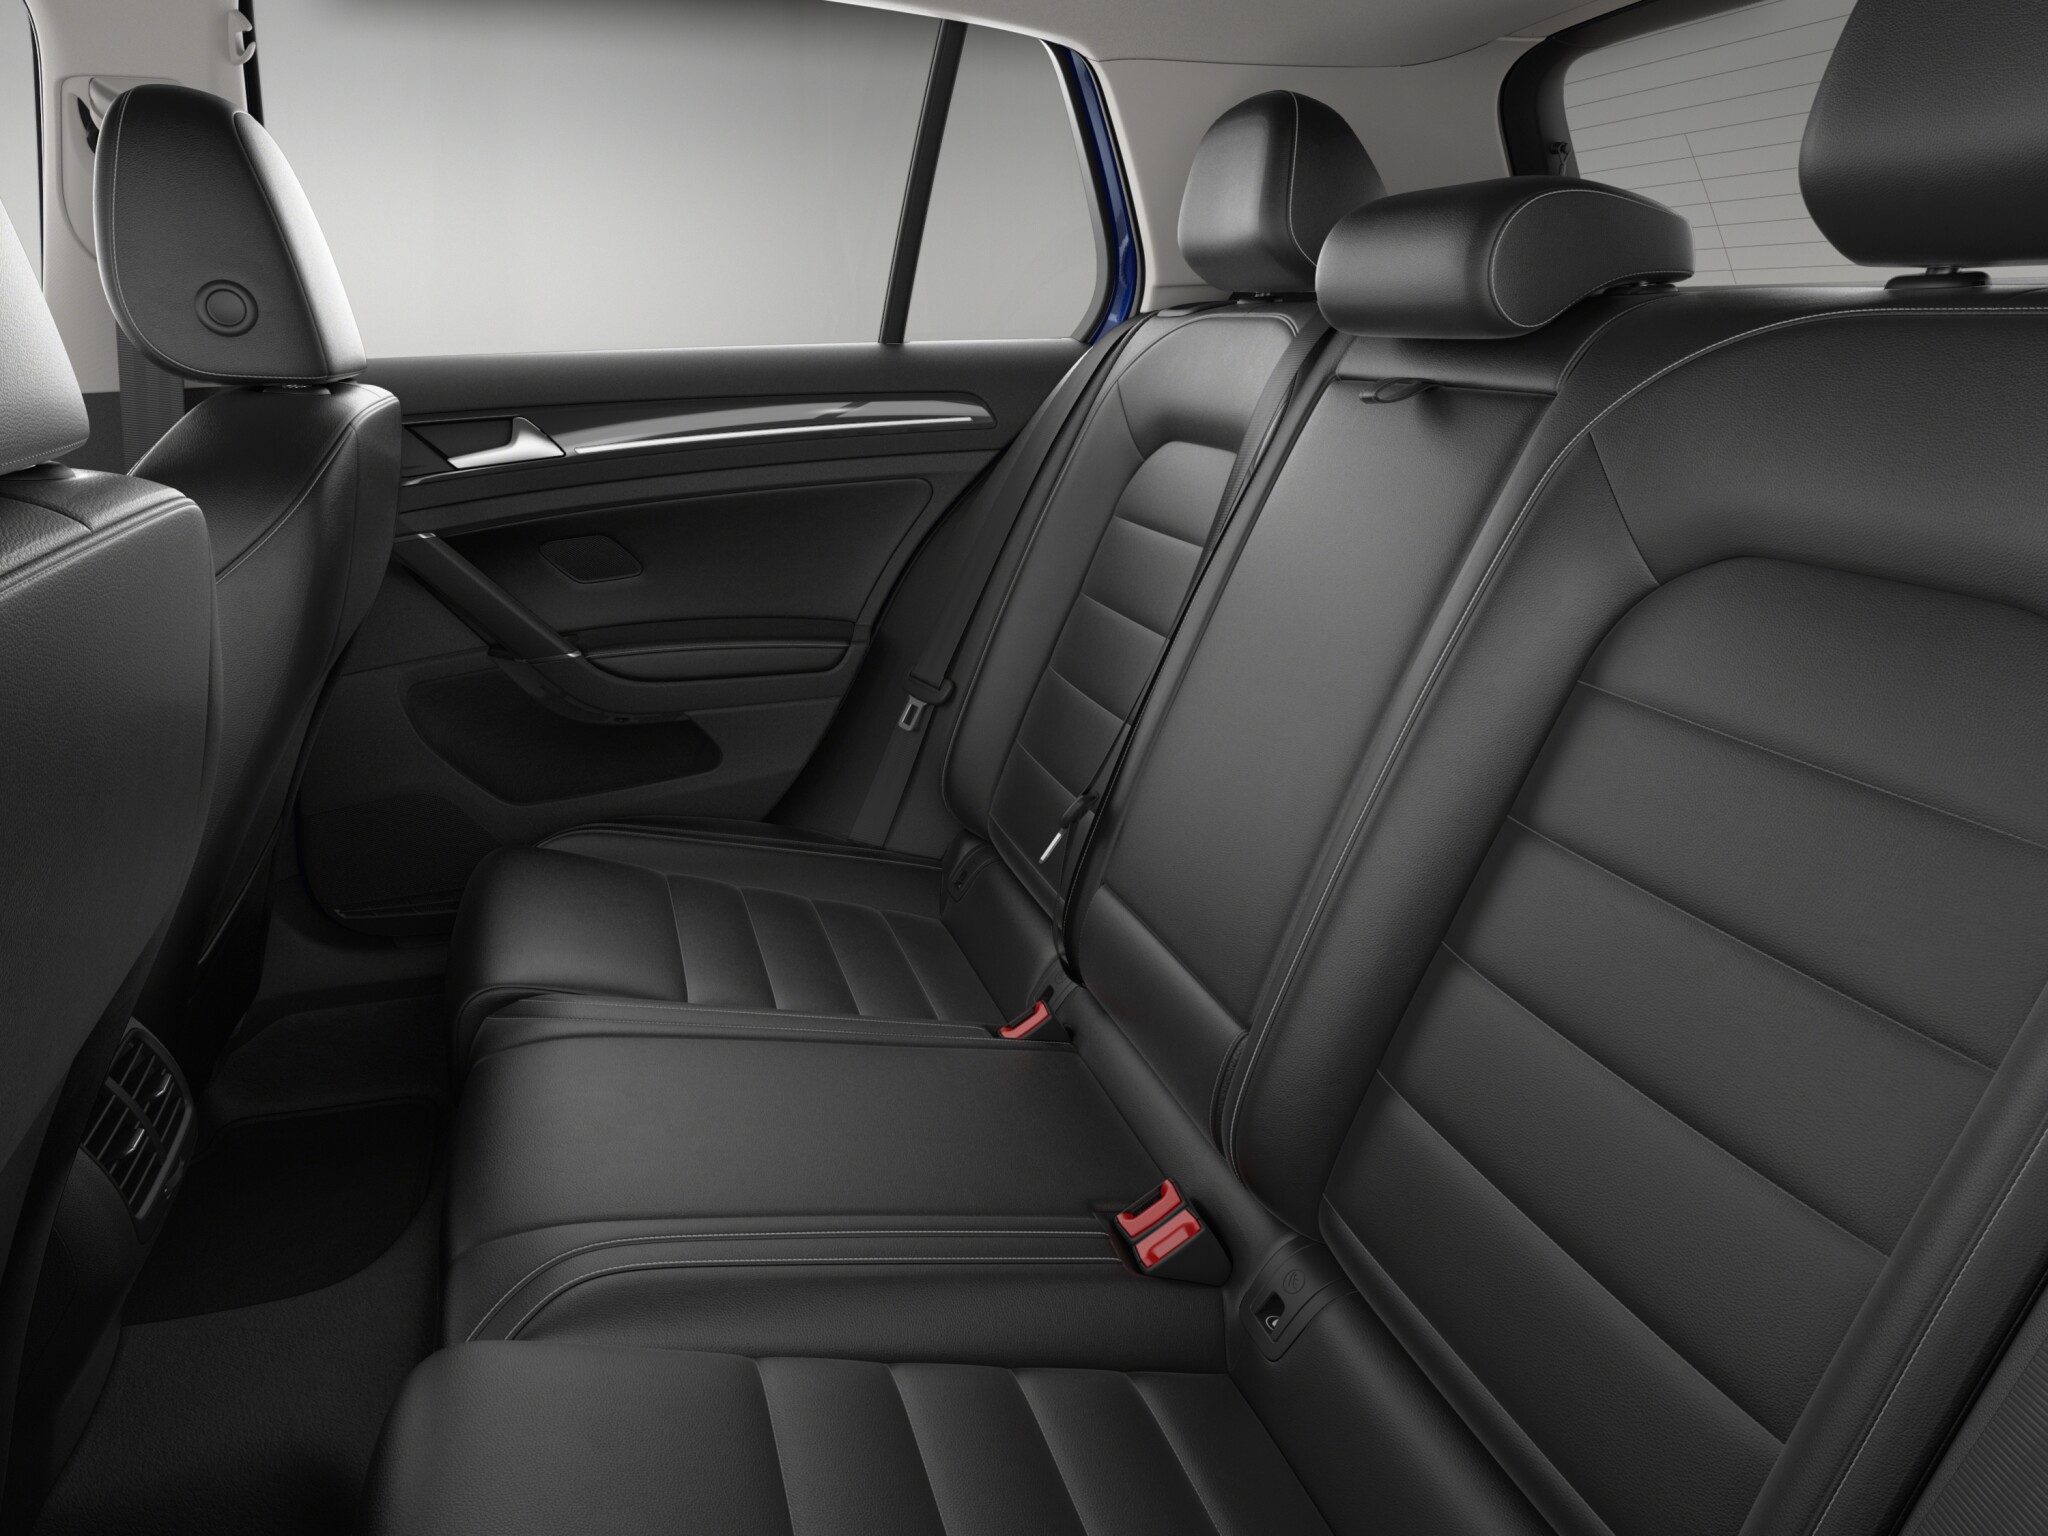 Volkswagen Golf R DCC Navication interior rear seat view